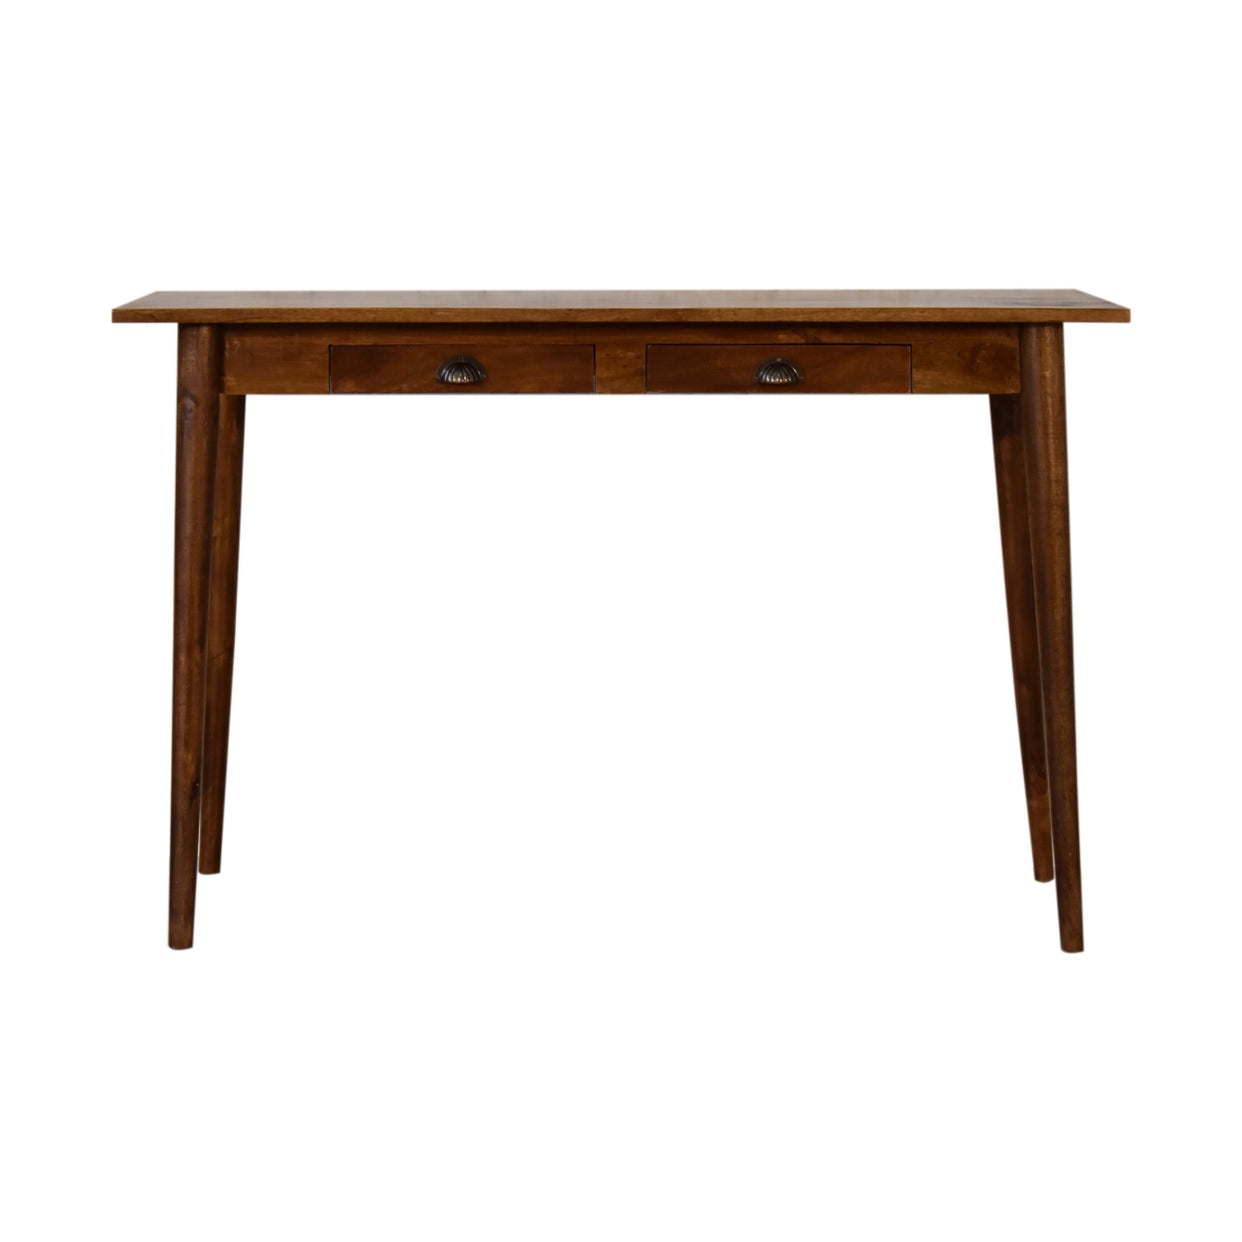 2 Drawer Chestnut Mango Wood Writing Desk from Artisan Furniture - IN2135